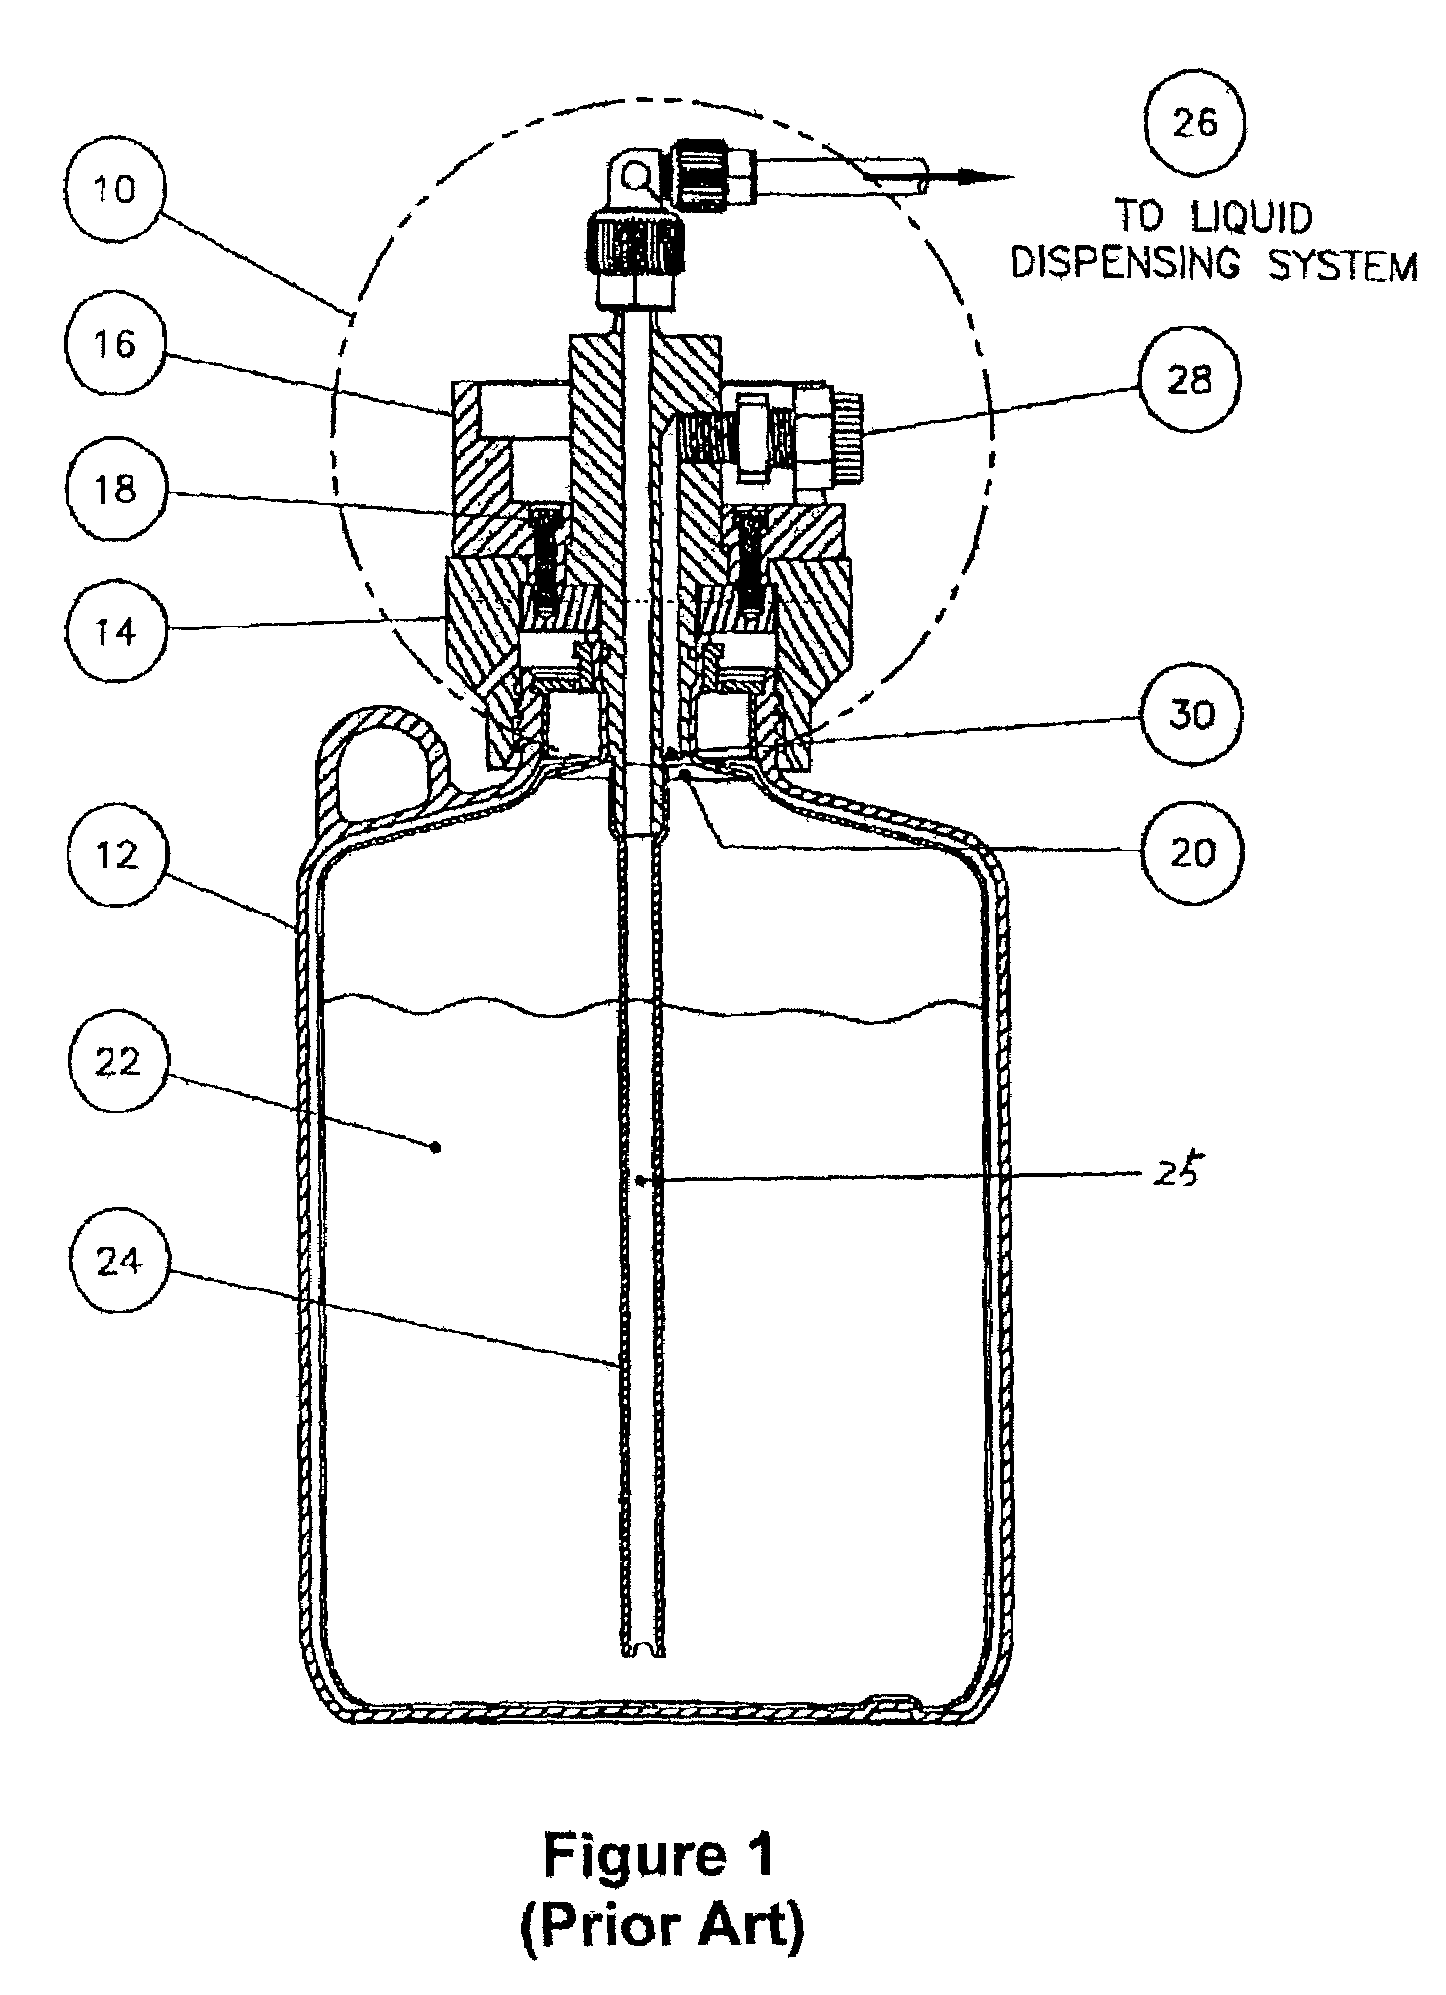 Apparatus and method for dispensing high-viscosity liquid